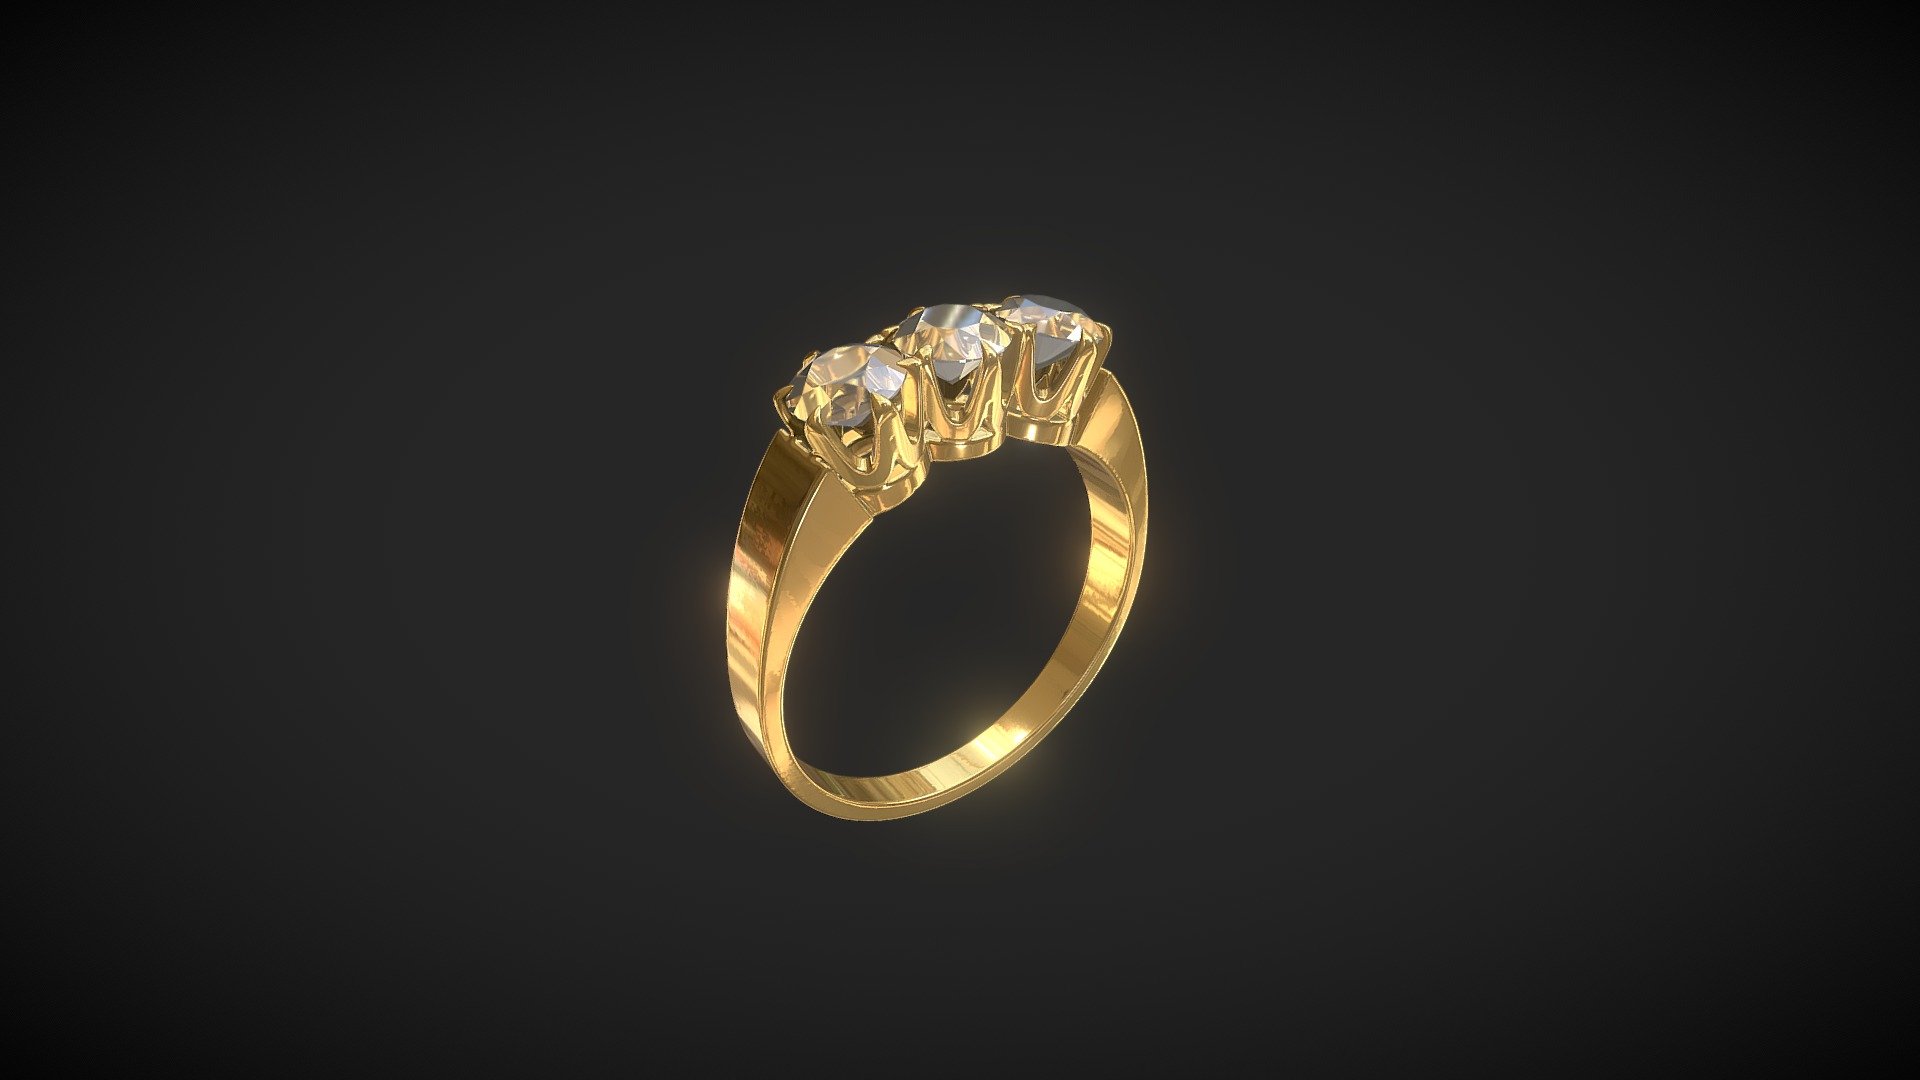 Jewelry. Ring with 3 diamonds